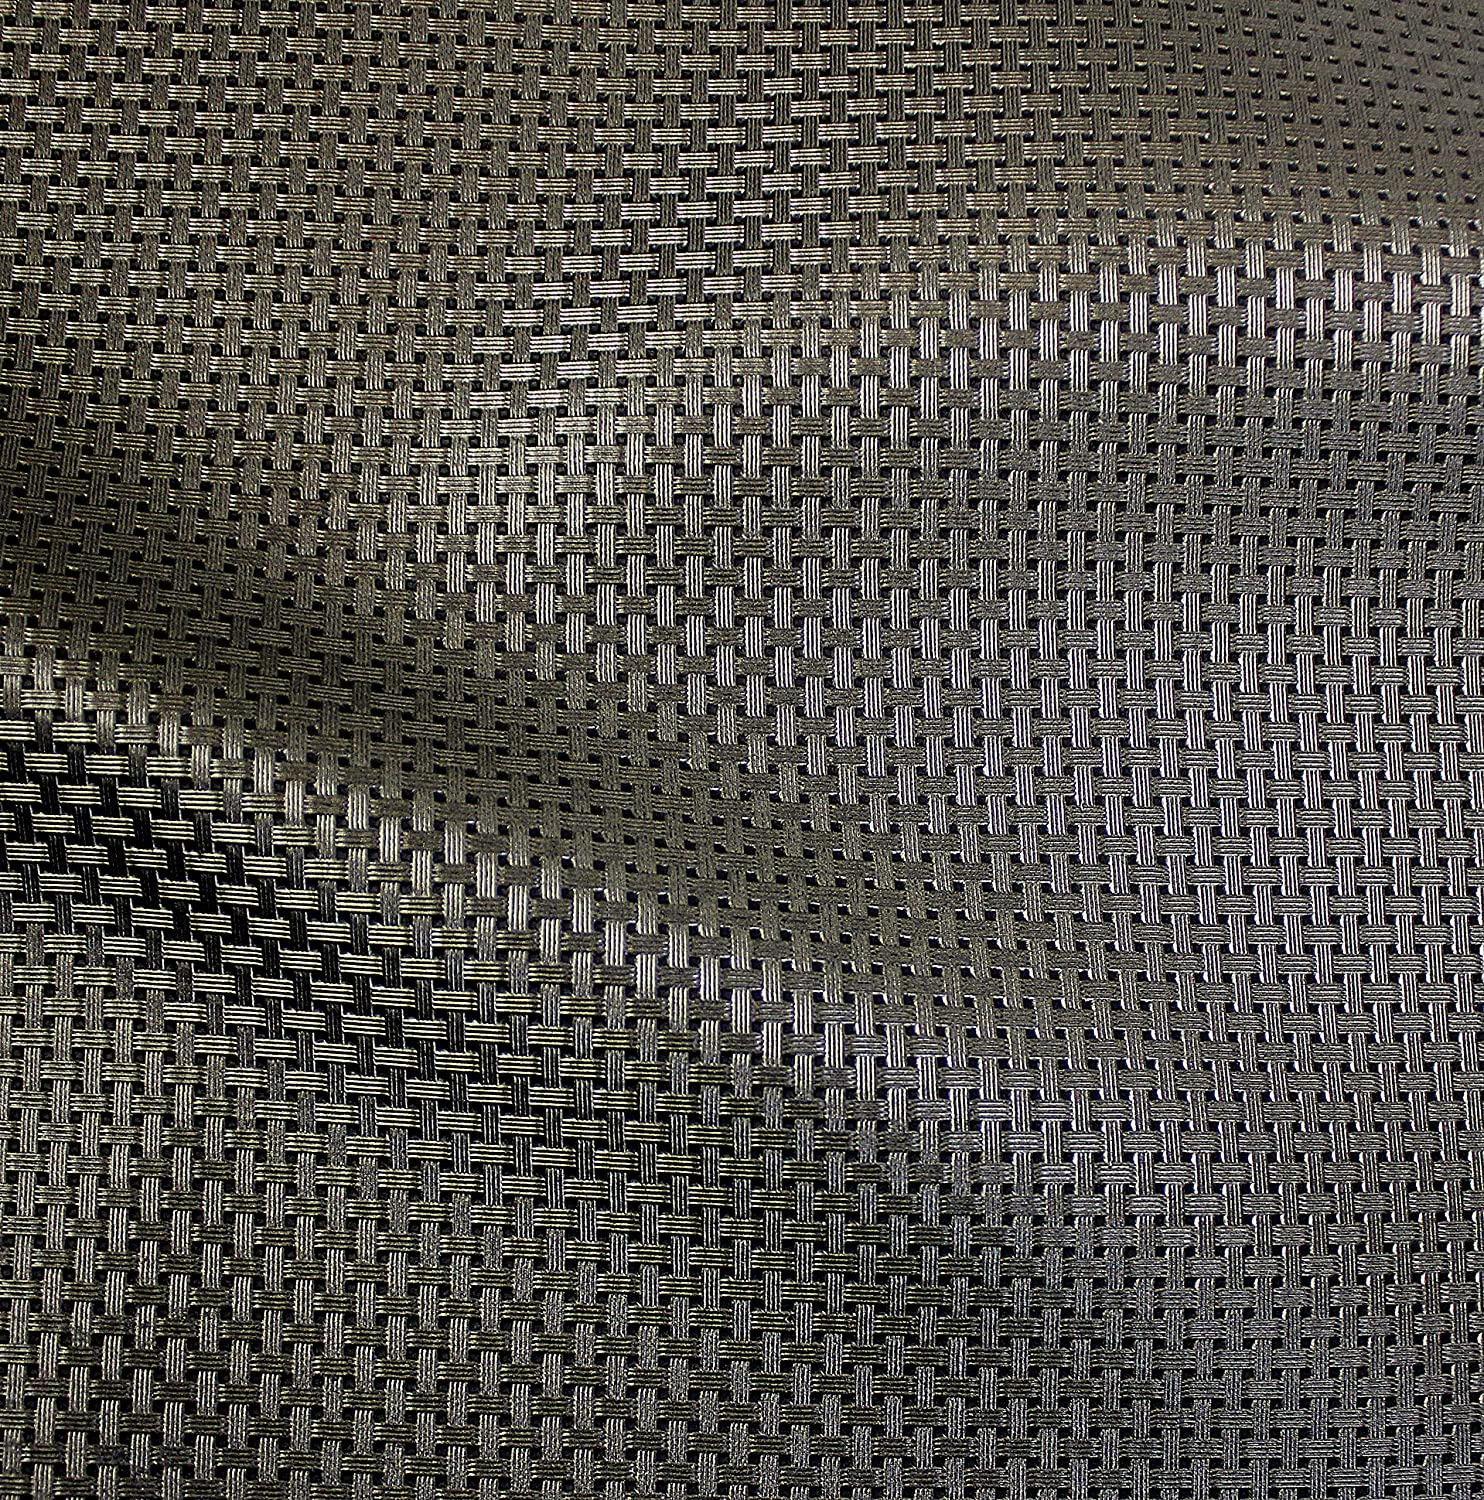 Bycast65 Black Matte Correct-Grain Pattern Faux Leather Marine Vinyl Fabric